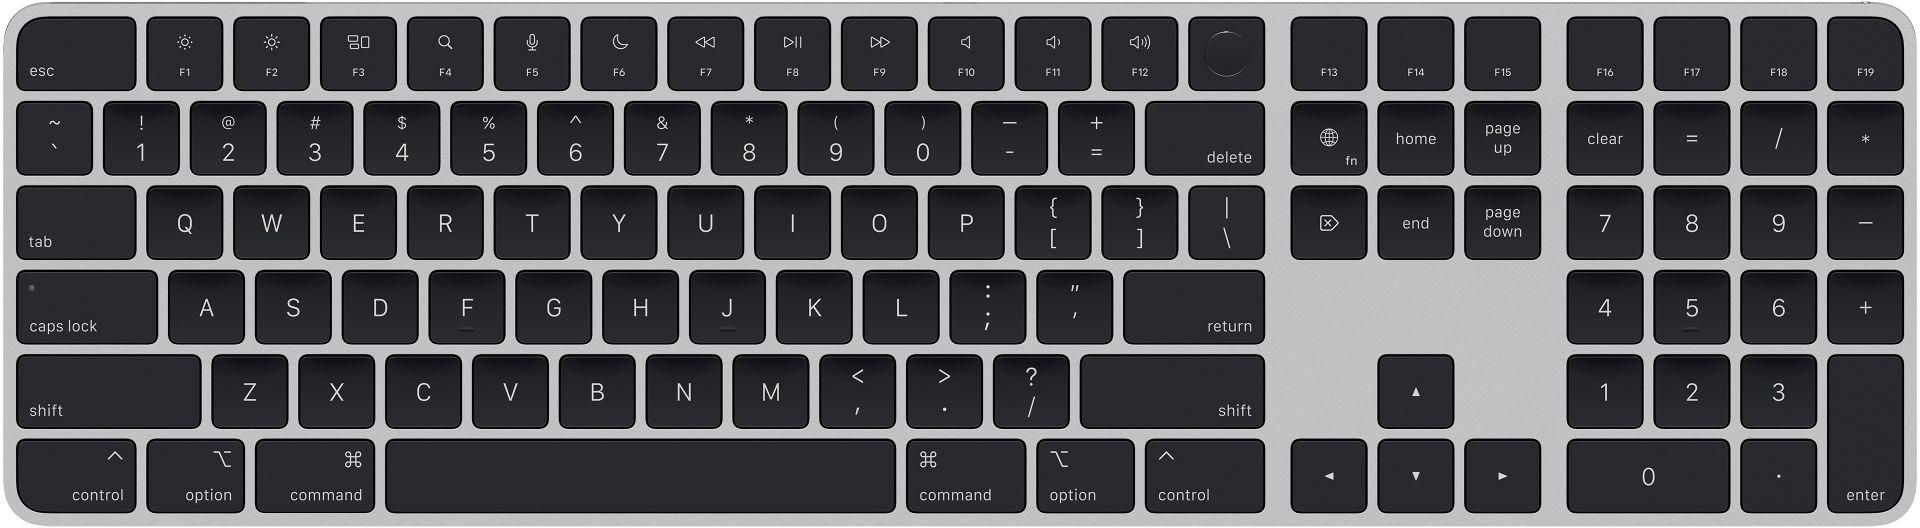 wireless keyboard for imac with numeric keypad